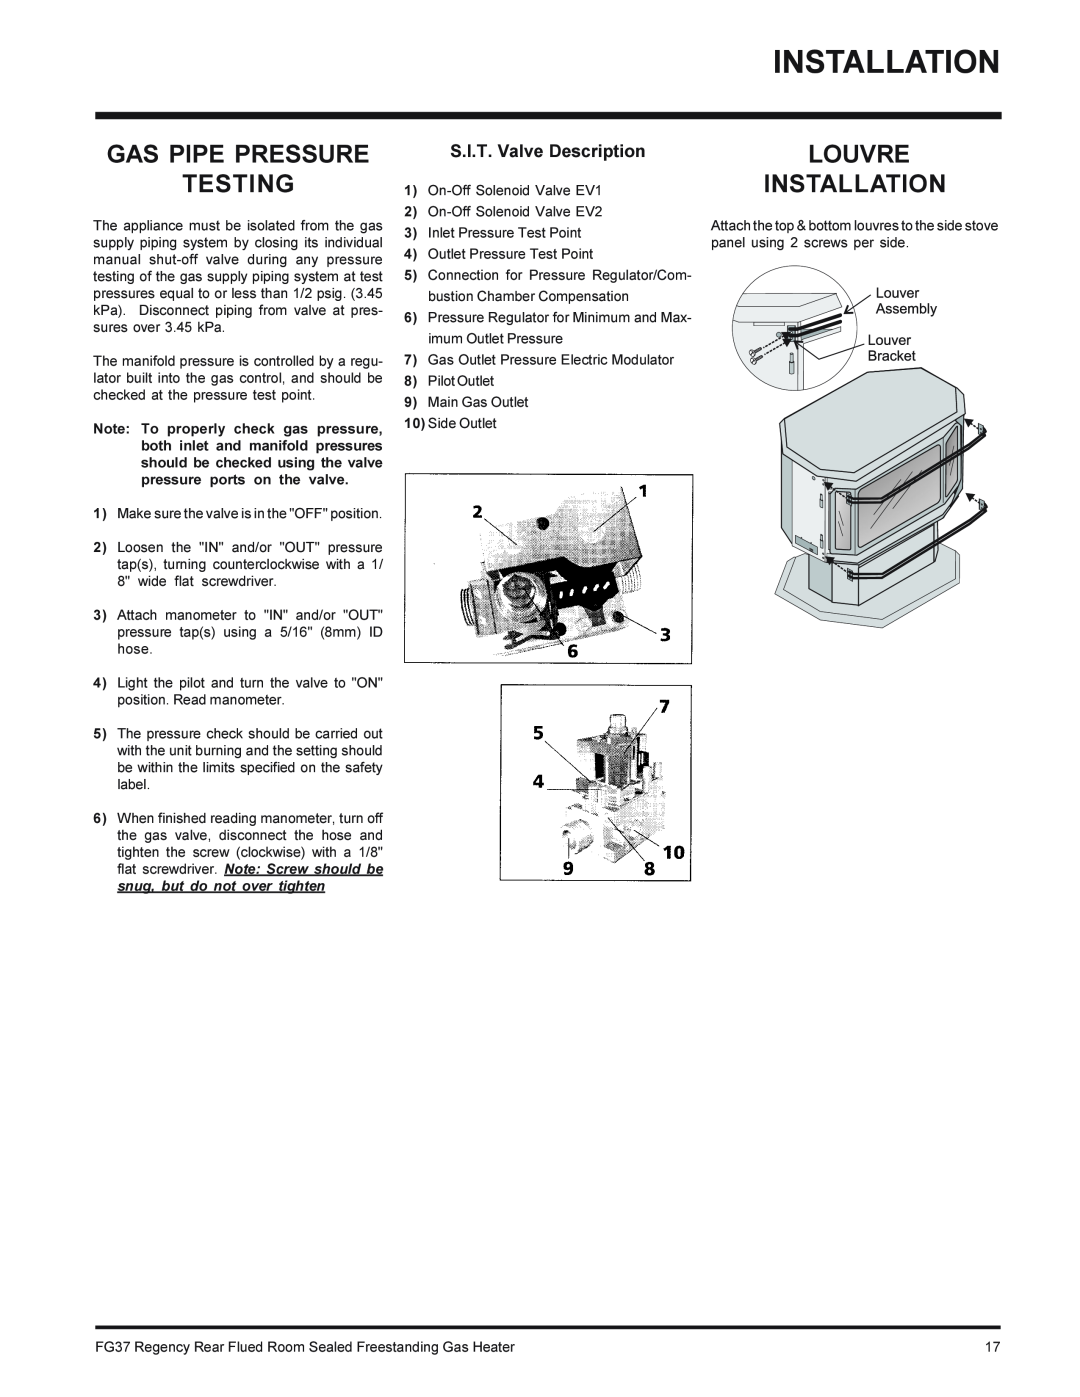 Regency FG37-NG, FG37-LPG installation manual Gas Pipe Pressure Testing, Louvre Installation, S.I.T. Valve Description 